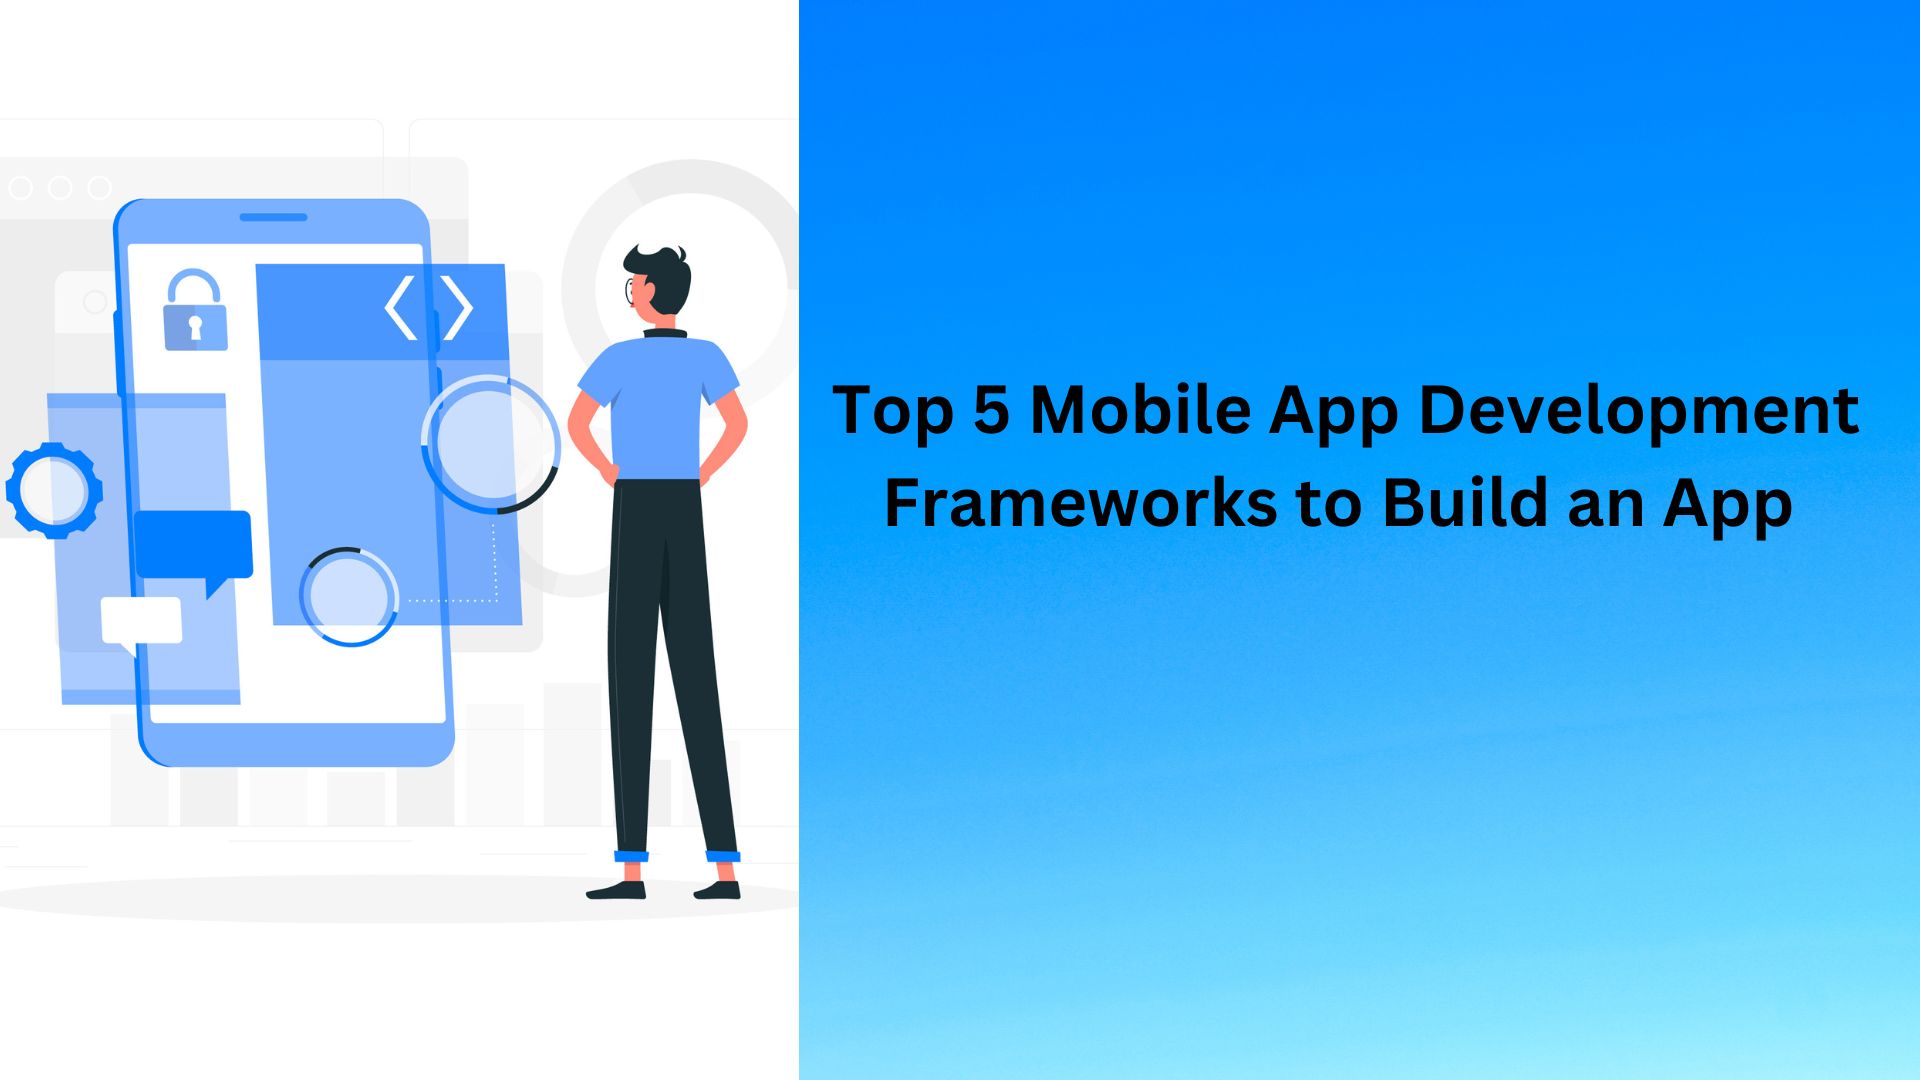 Top 5 Mobile App Development Frameworks to Build an App